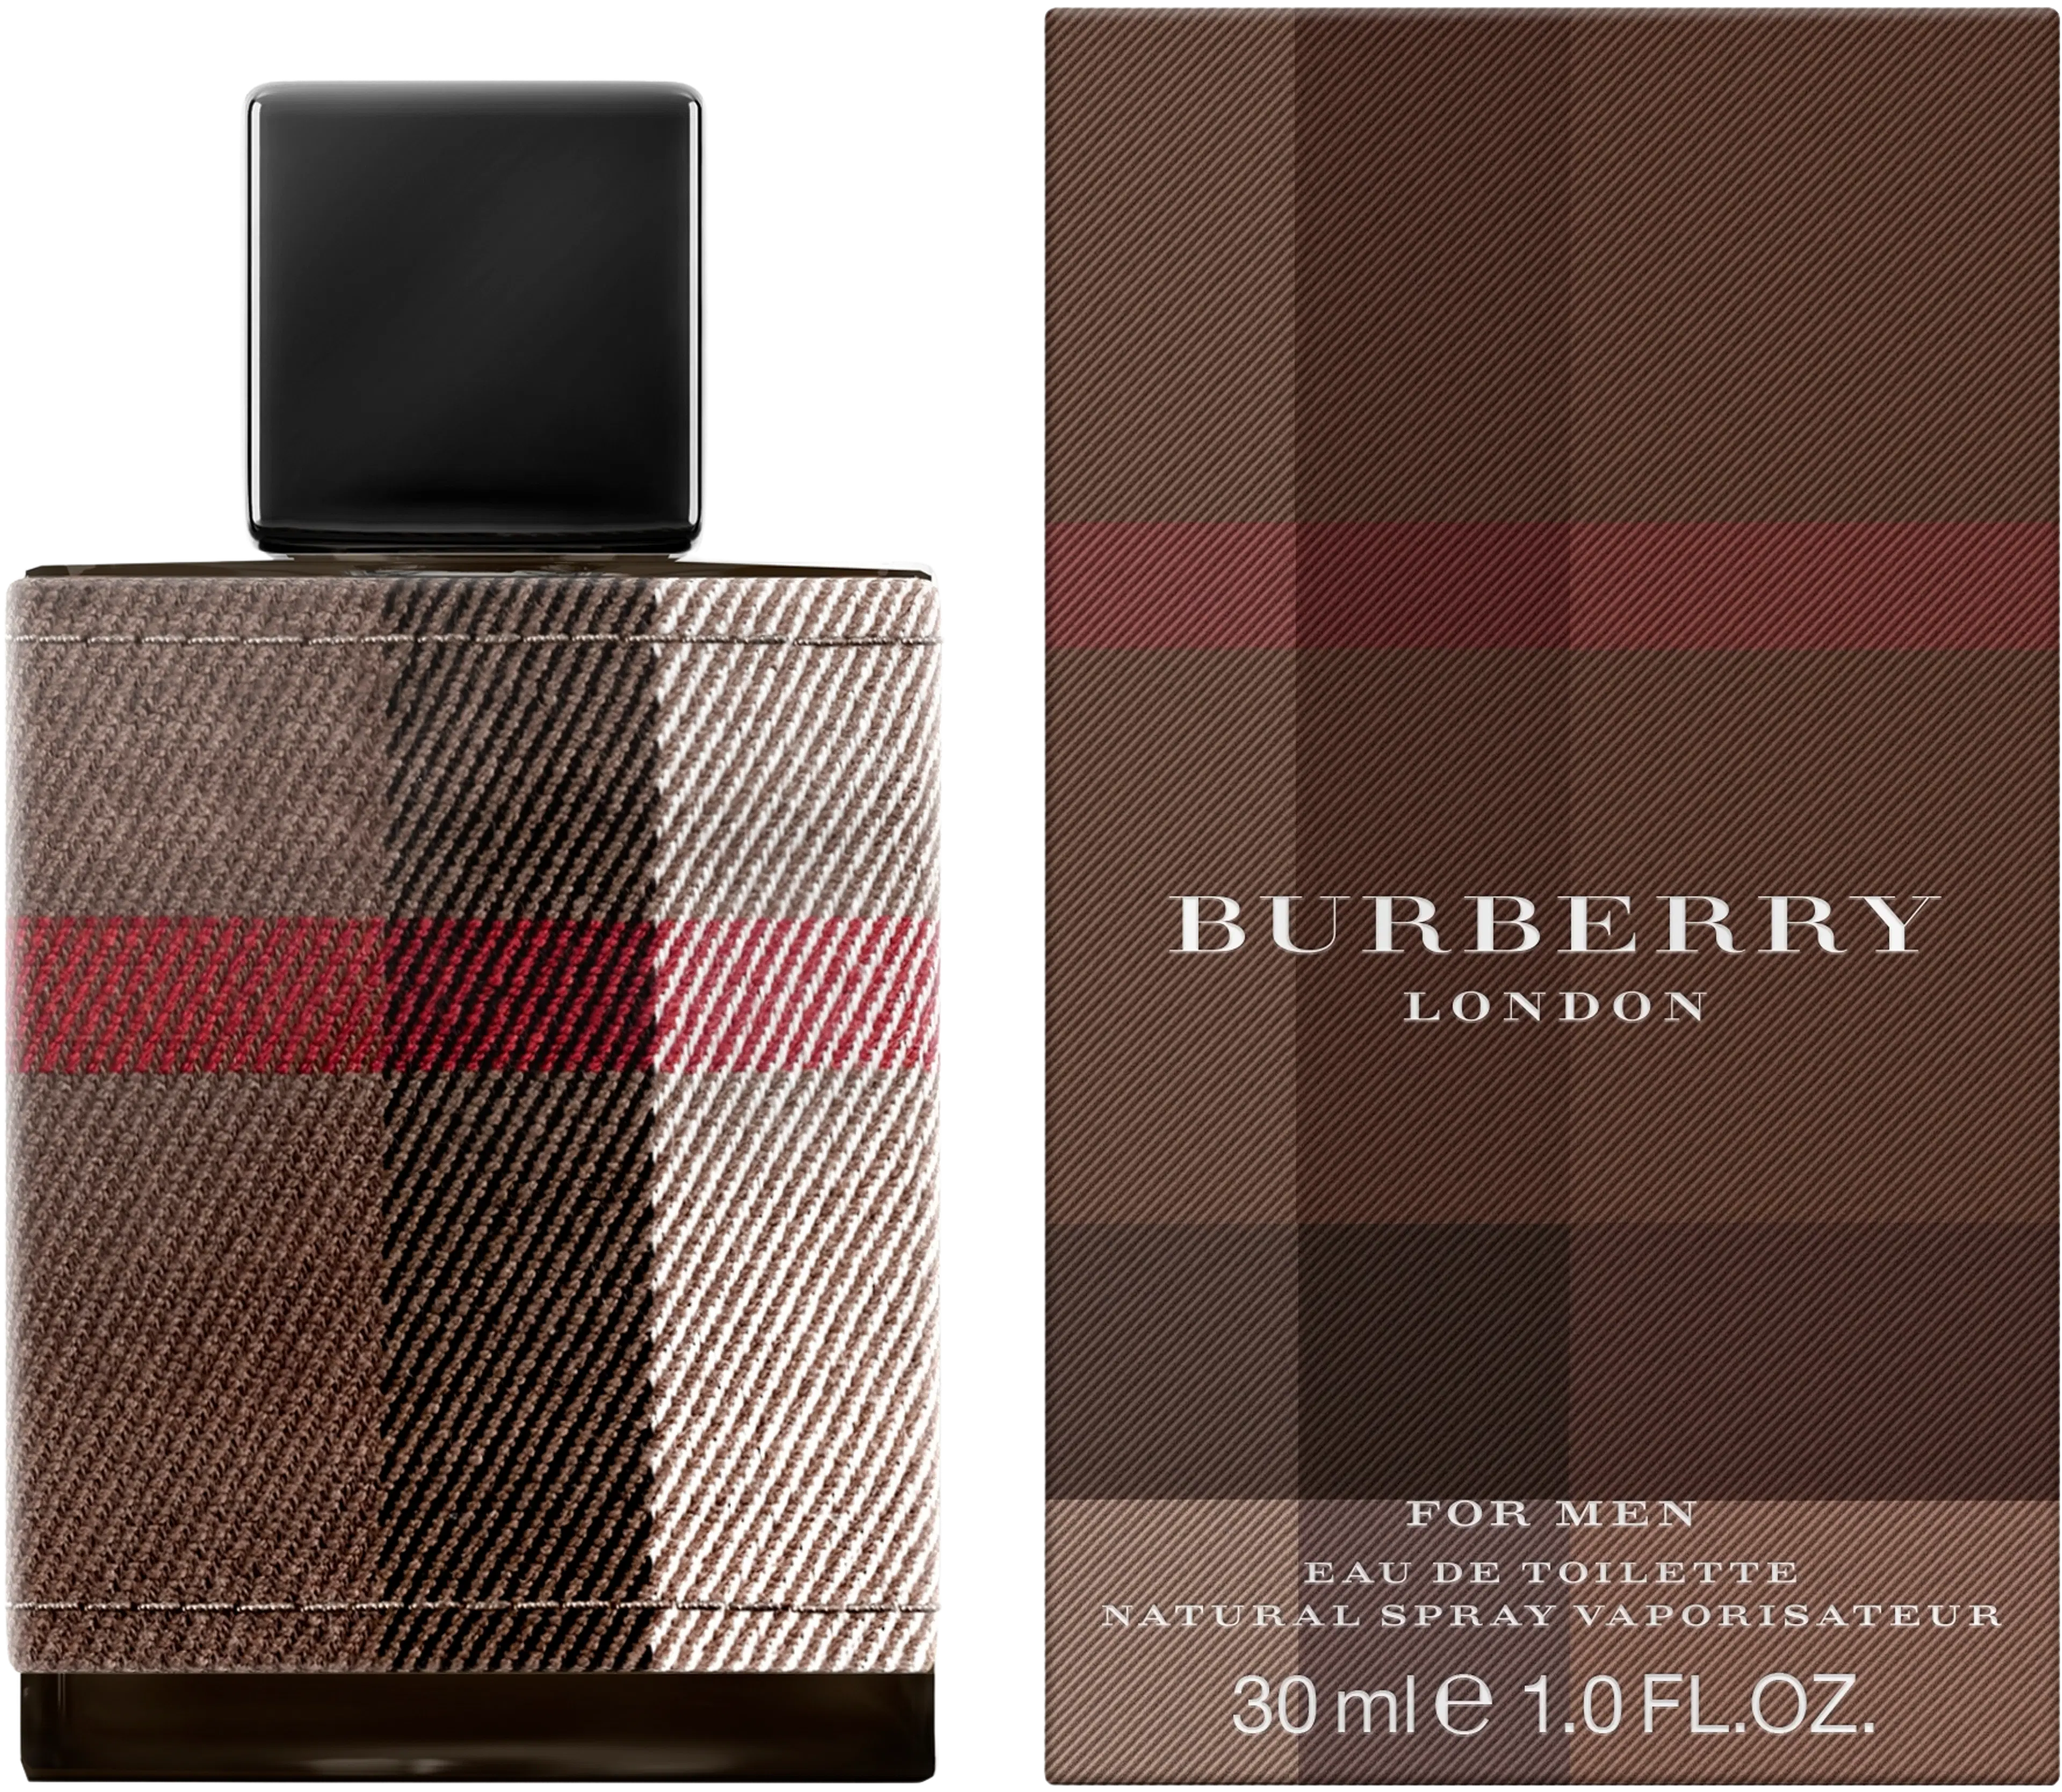 Burberry London for Men EdT tuoksu 30 ml